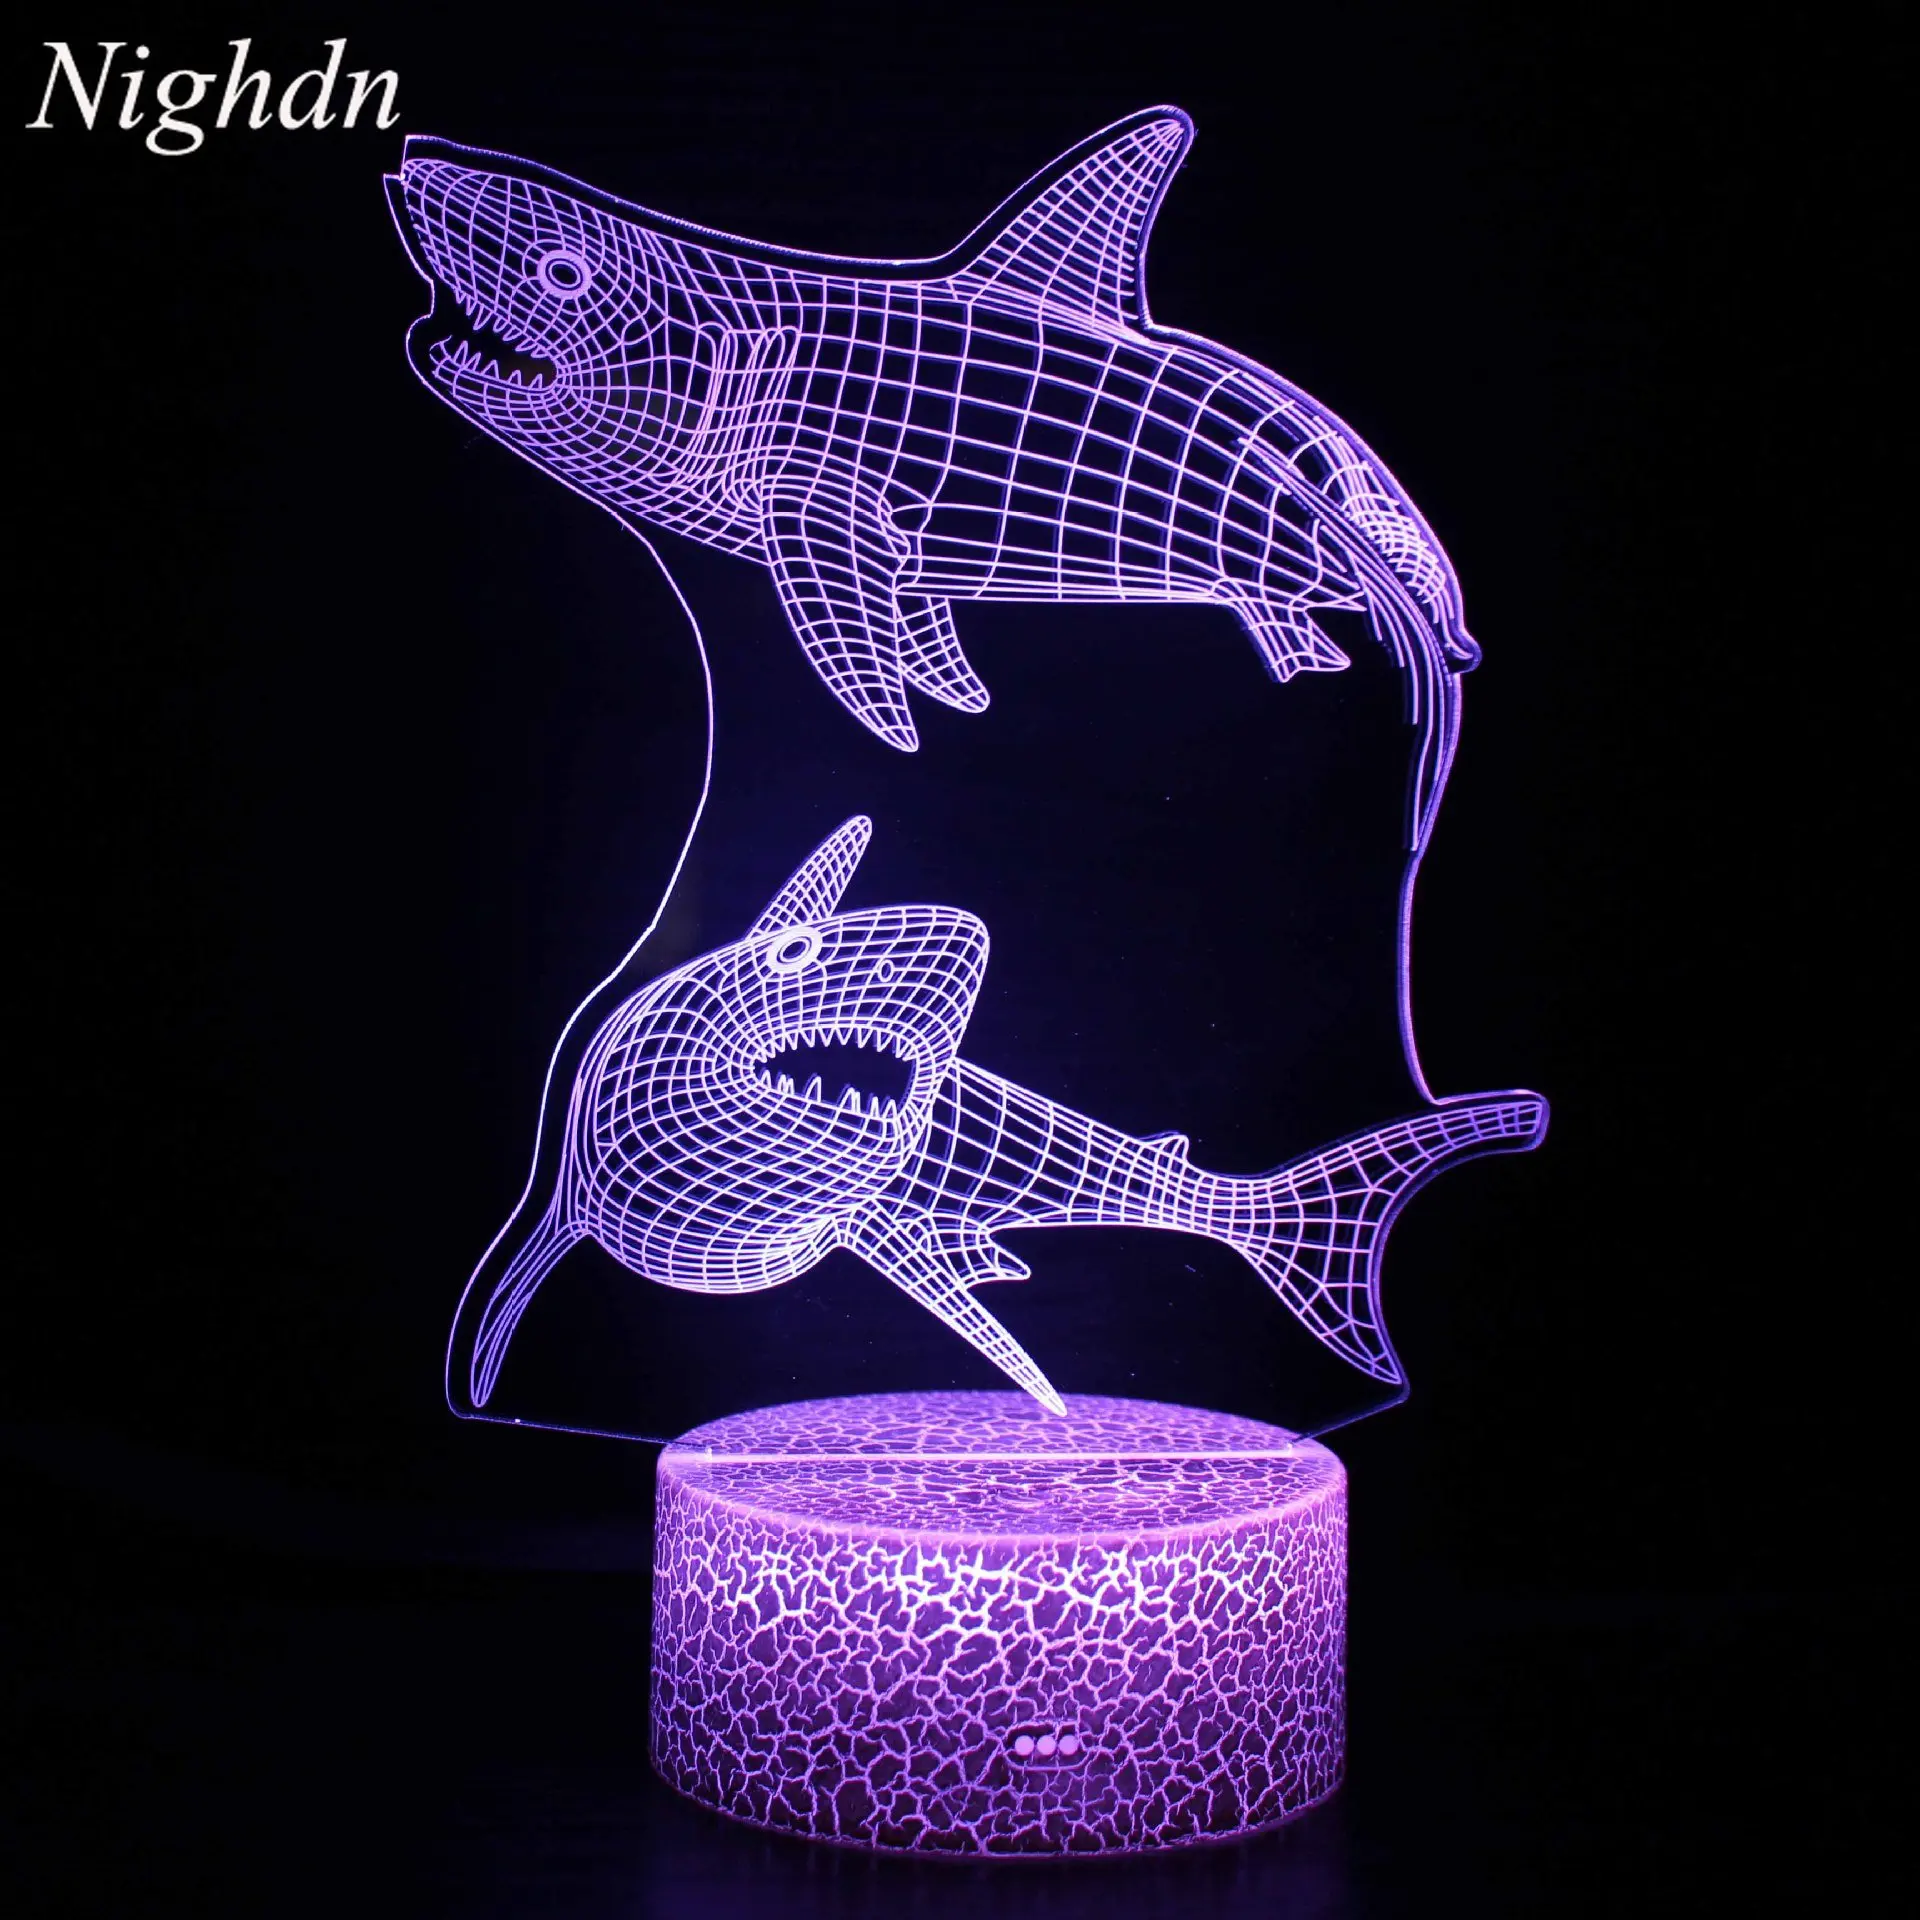 

Nighdn Shark Night Light Lamp 7 Color Changing Bedroom Bedside Decoration LED Lights Birthday Christma Gift for Kid Boys Girls